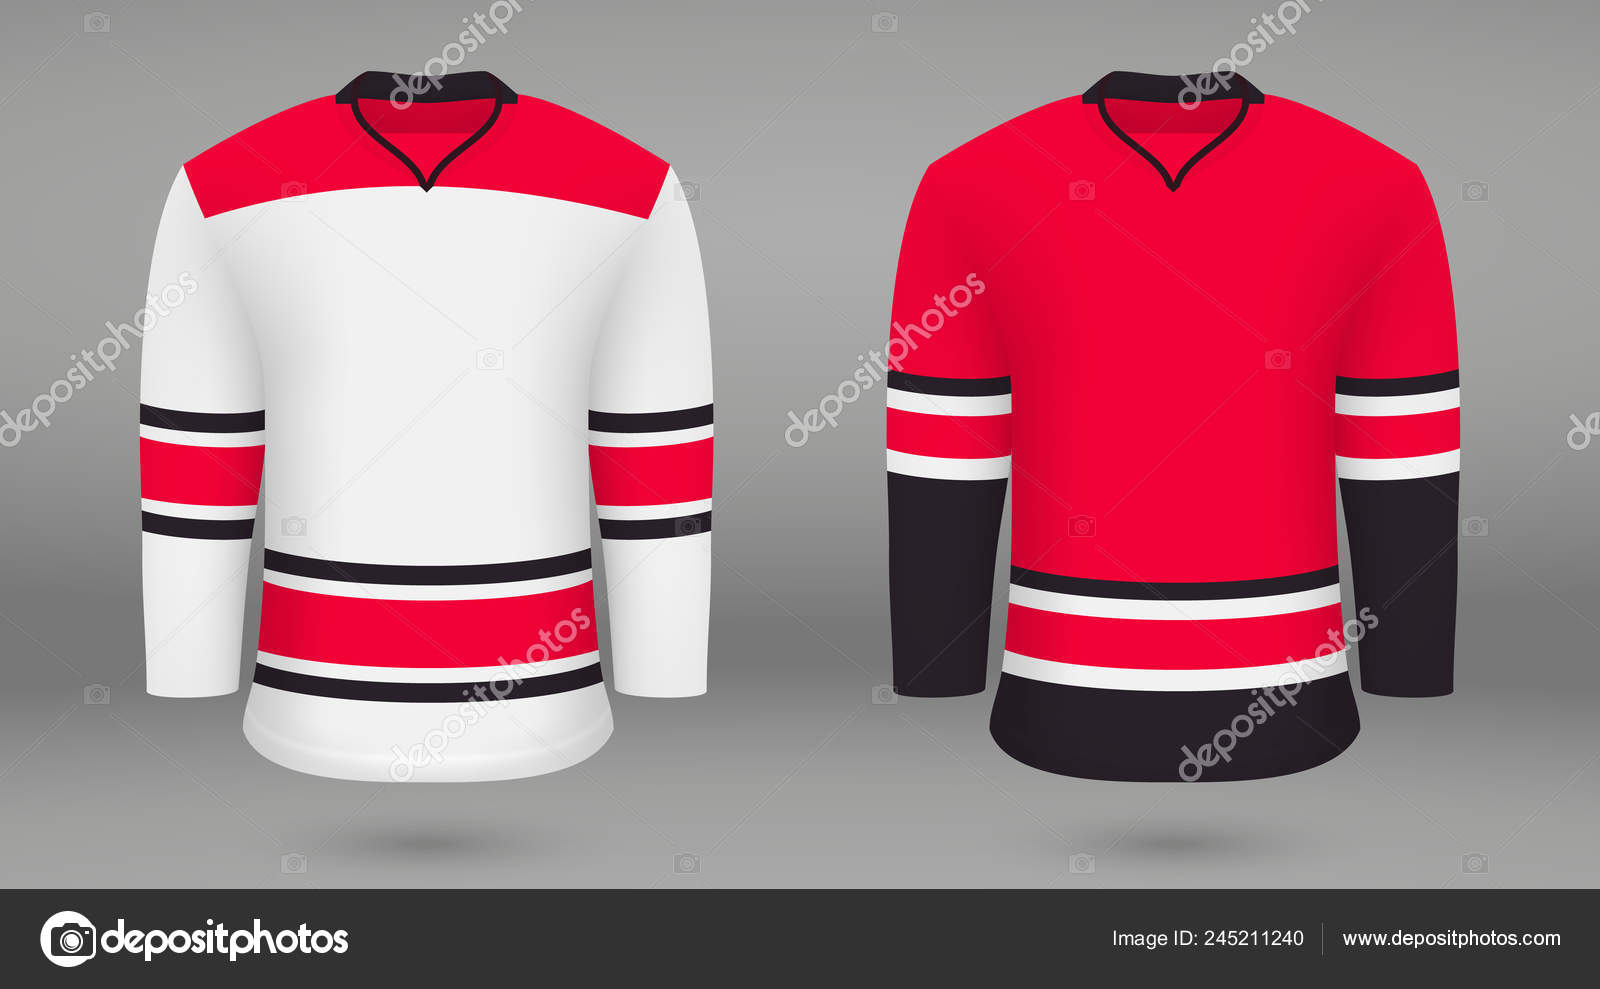 Realistic Hockey Kit, Shirt Template For Ice Hockey Jersey Detroit